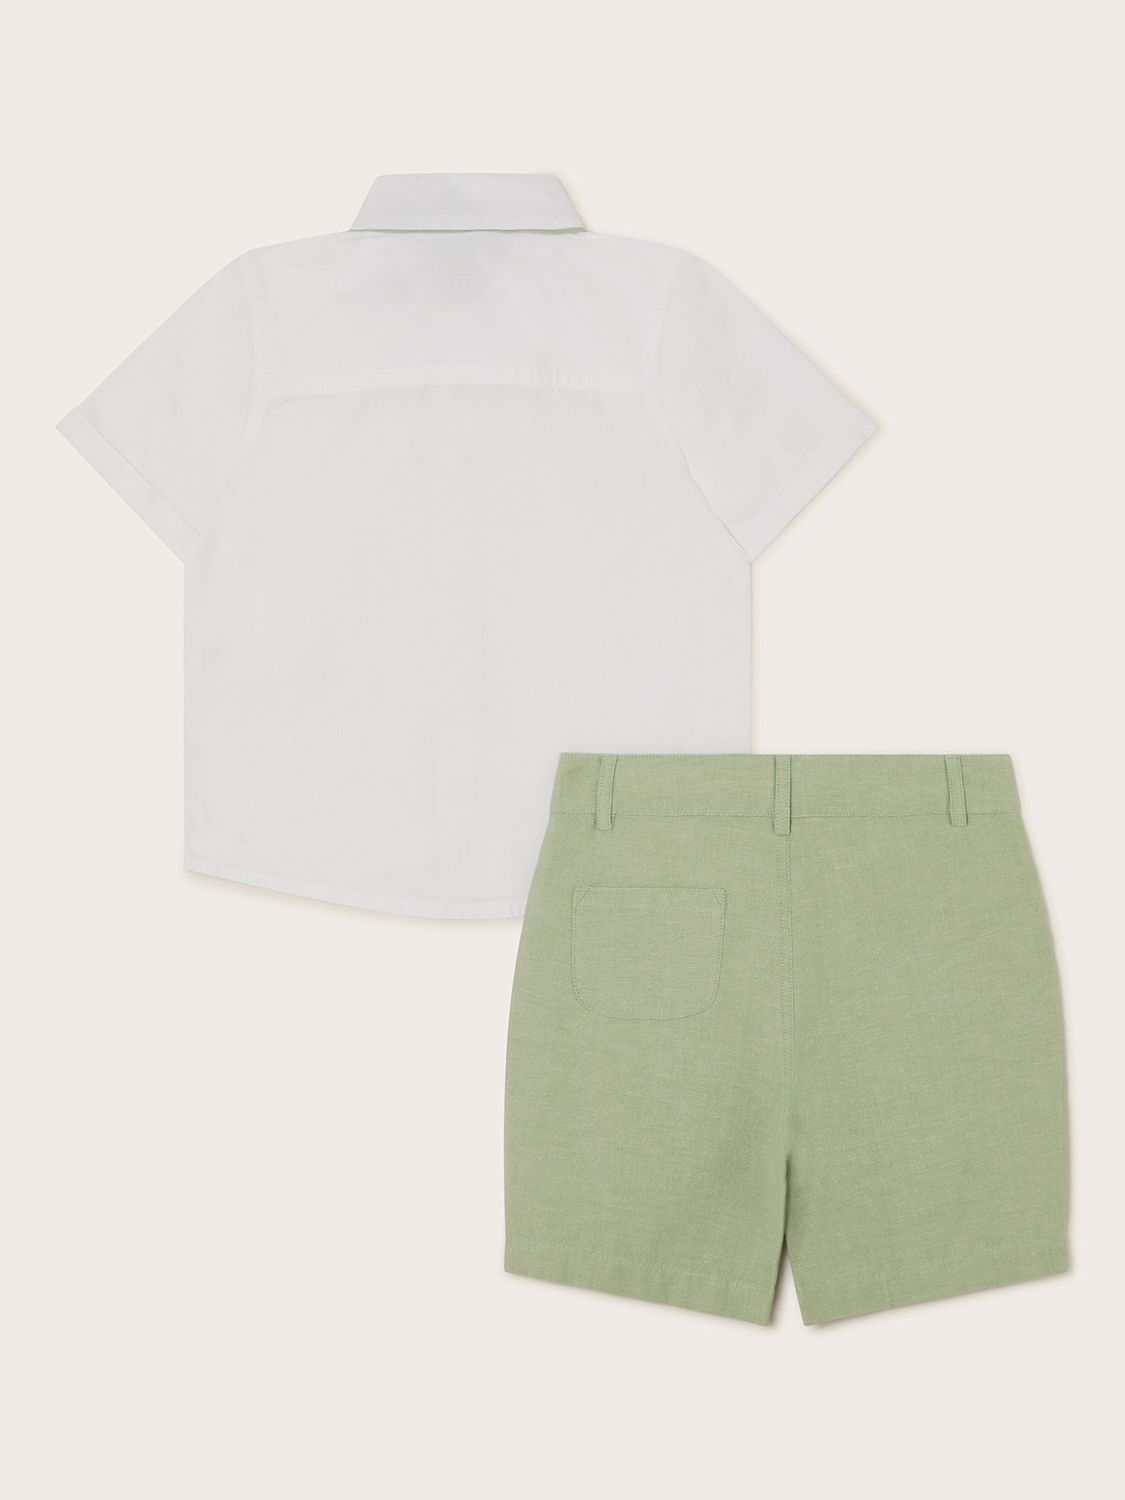 Monsoon Kids' Smart Shirt, Shorts & Bow Tie Set, Sage, 10 years